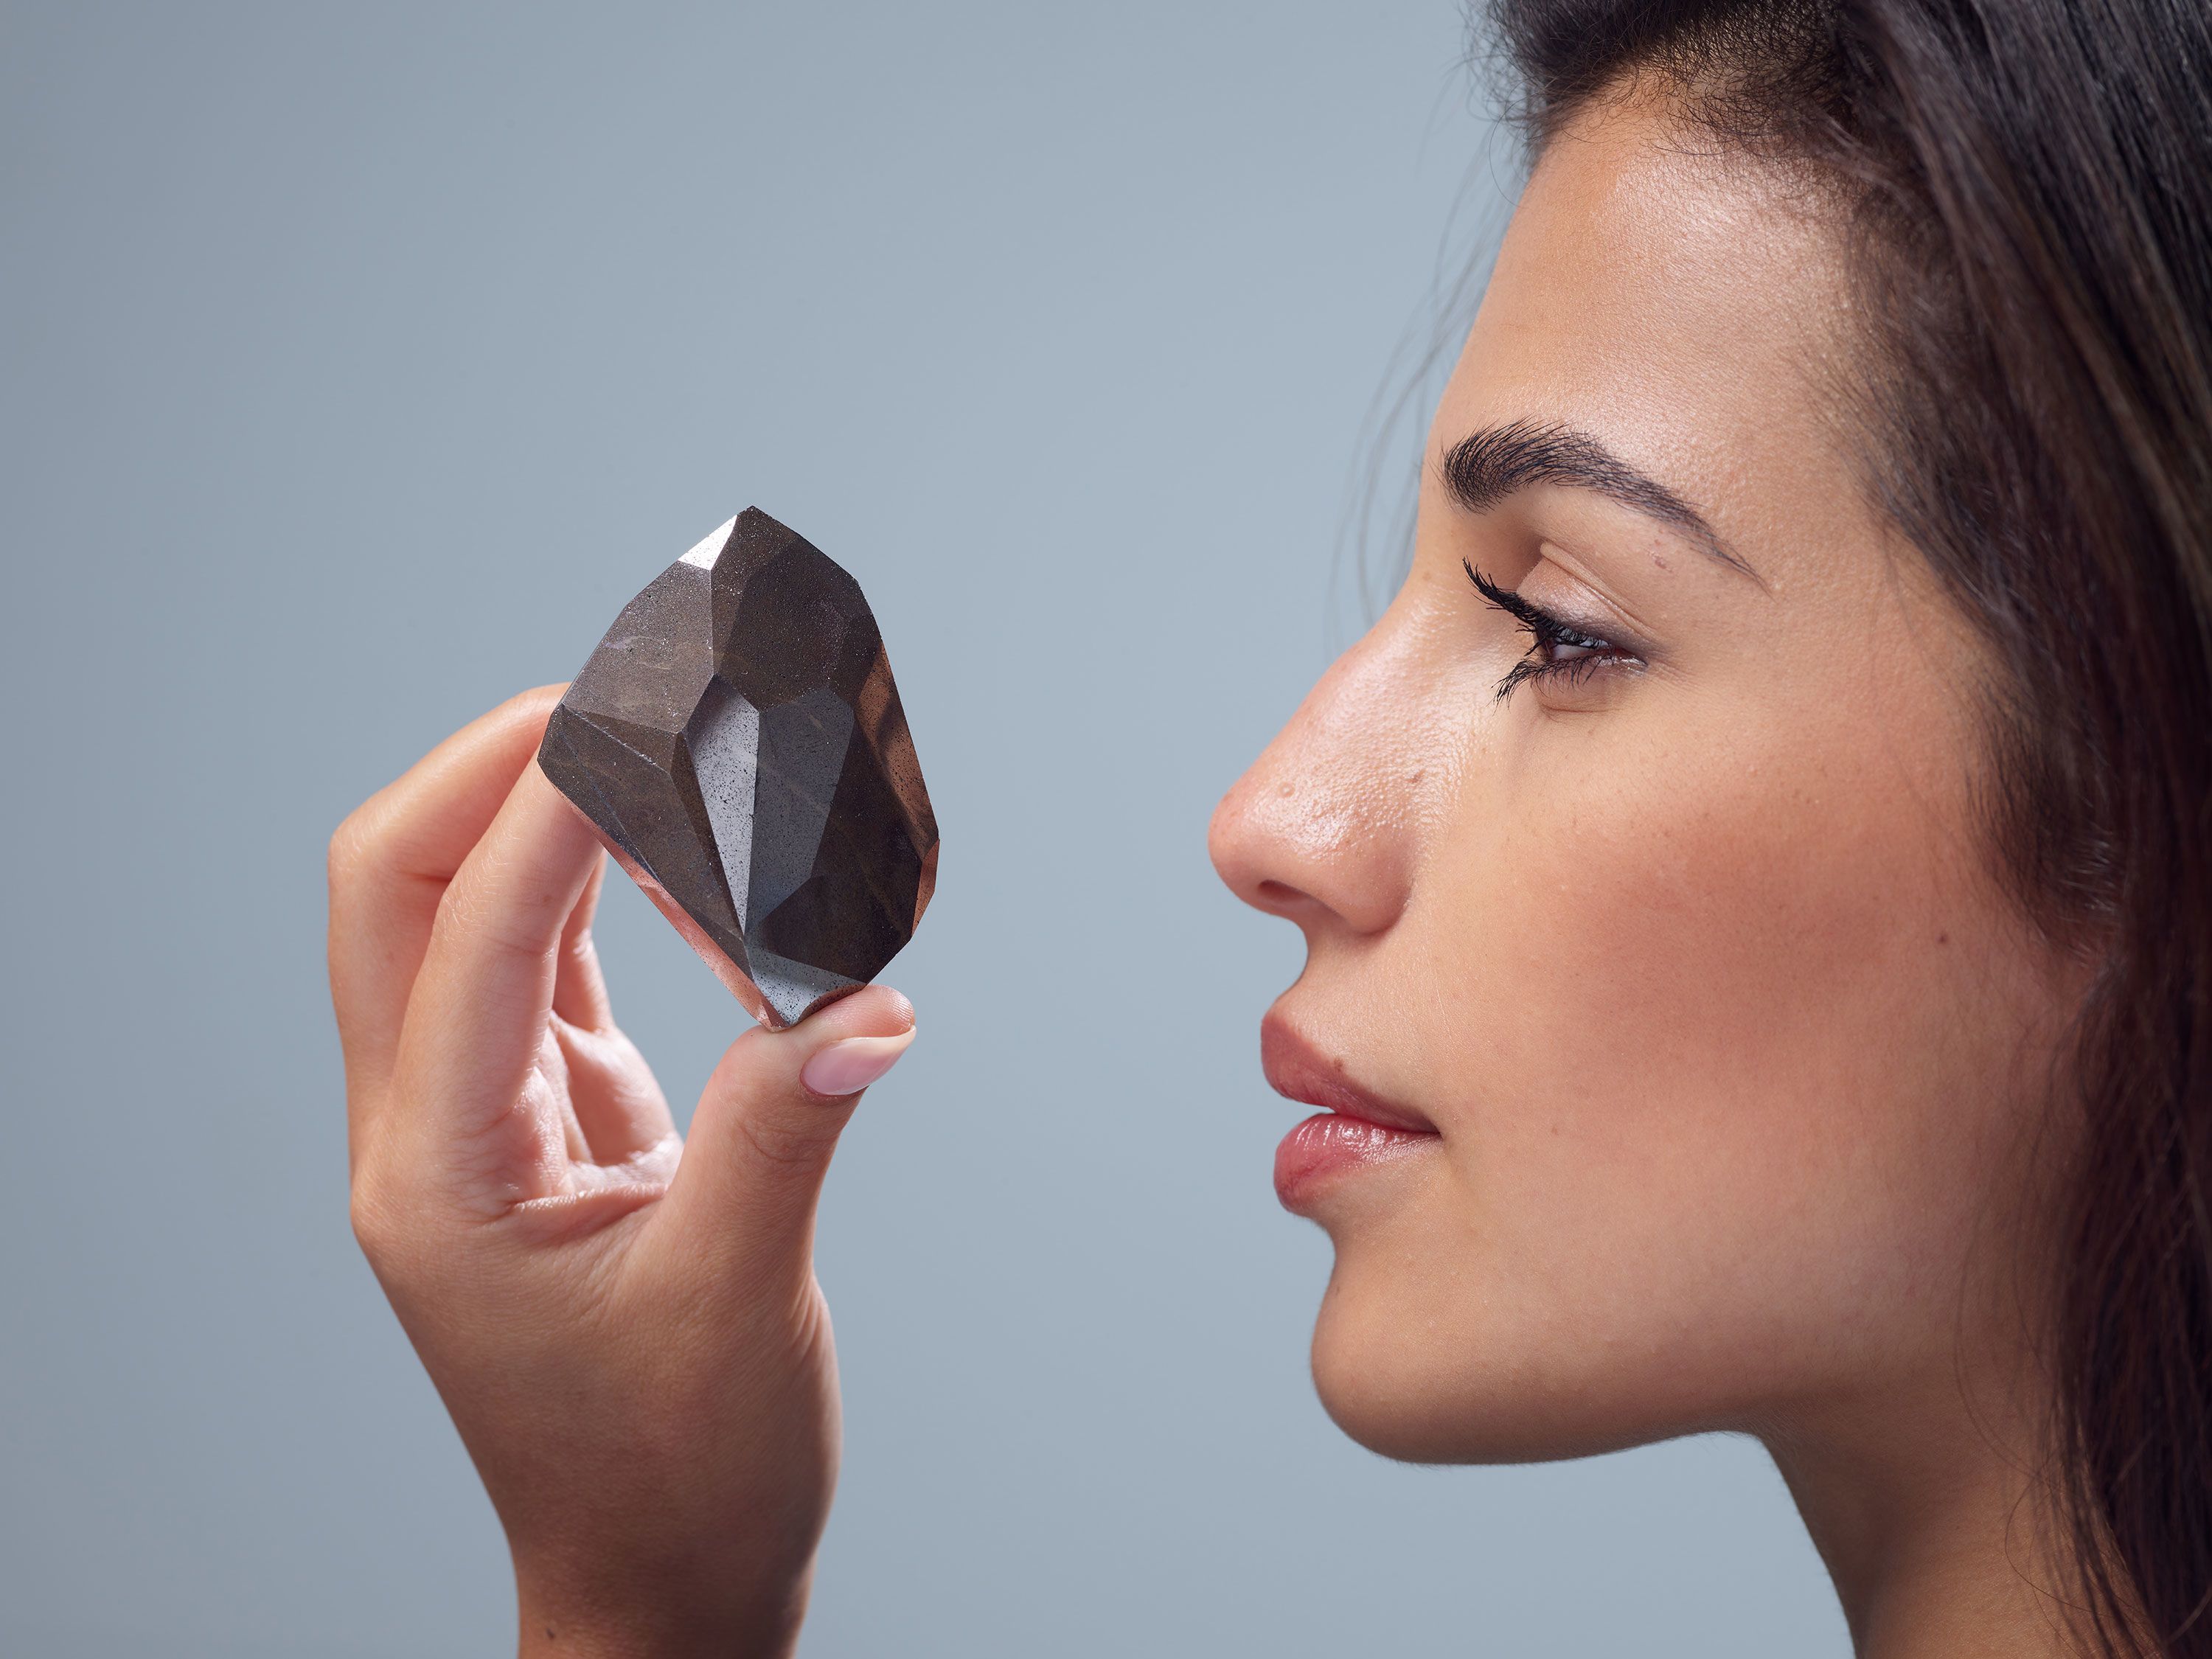 555.55-carat black diamond worth $6.8 mn lands in Dubai - BusinessToday